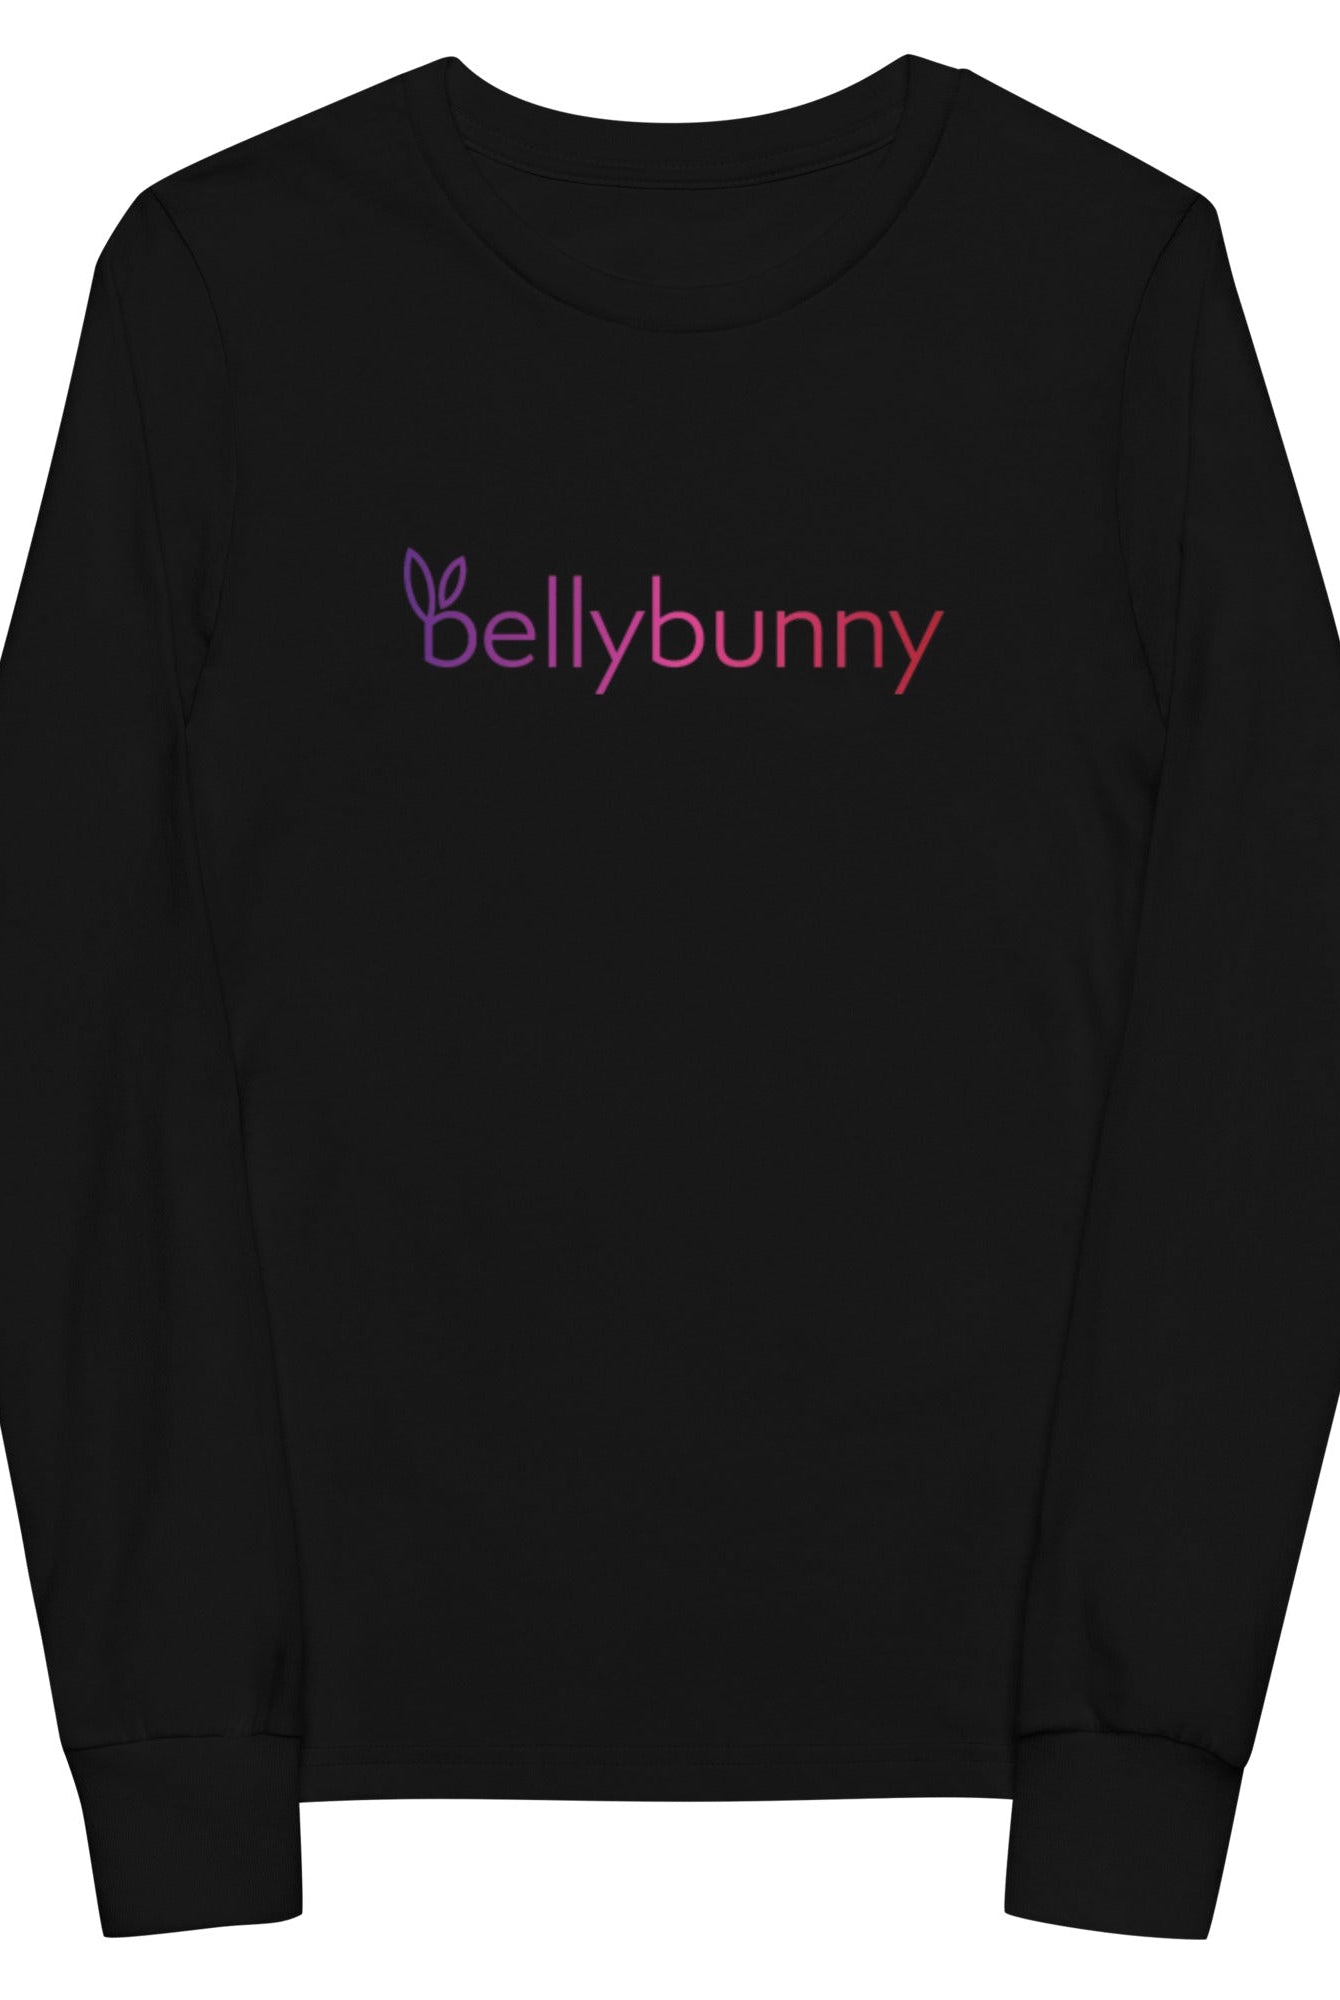 Bellybunny-Youth Long Sleeve T-Shirt-Black-with rainbow logo